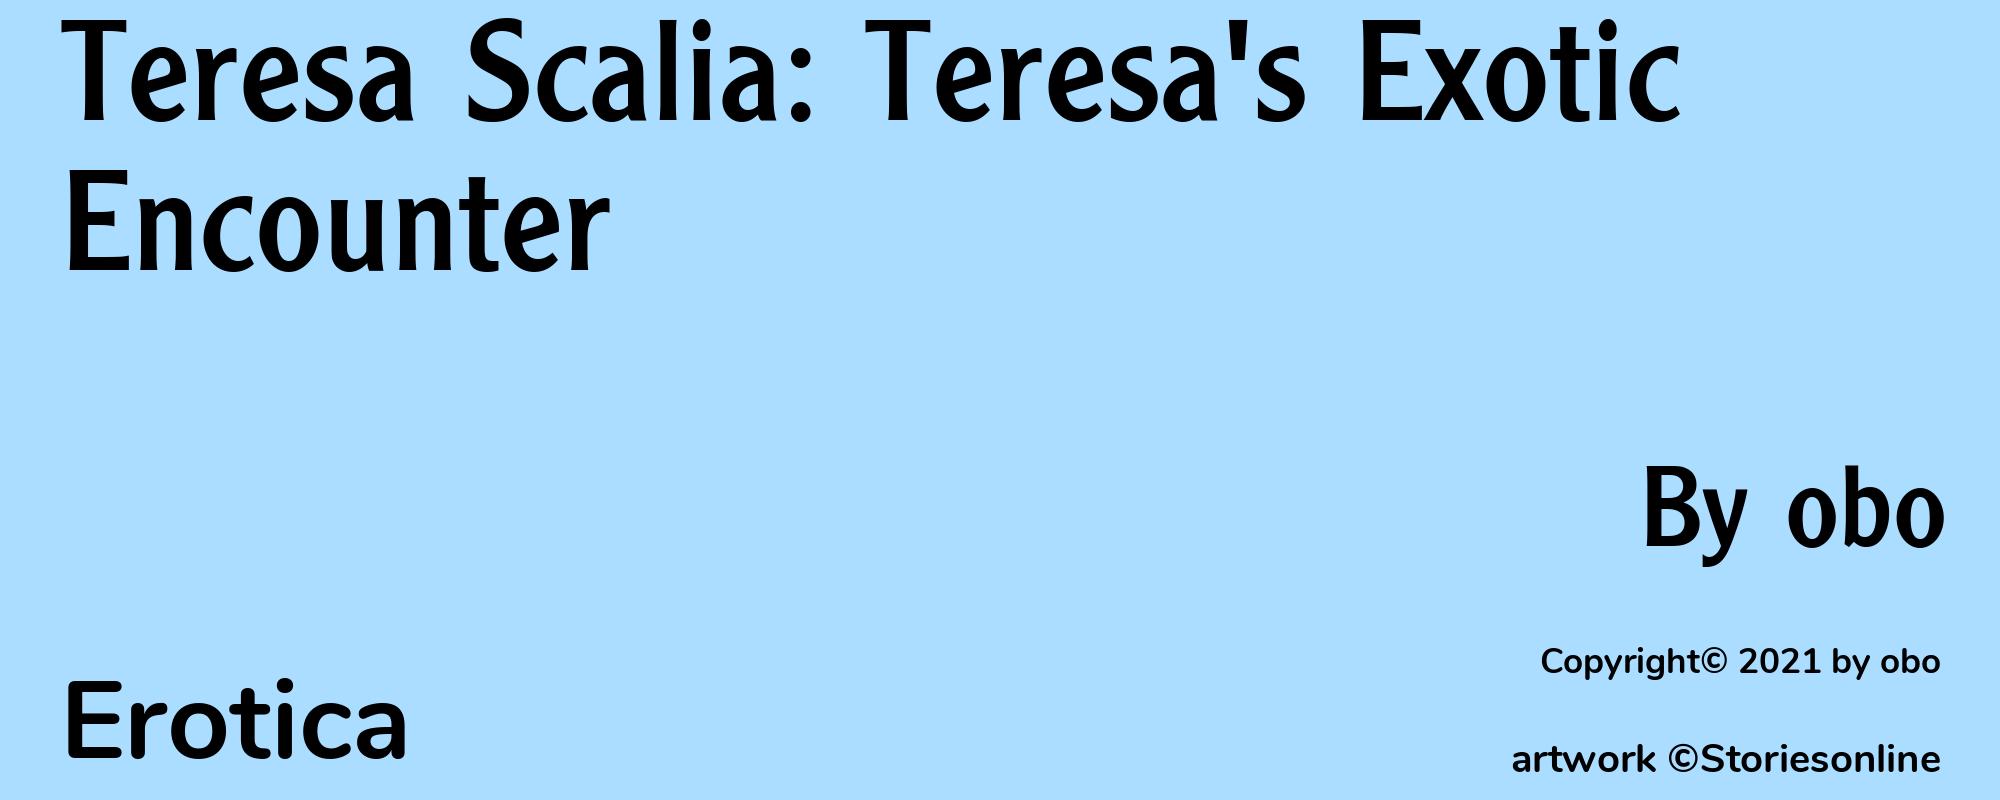 Teresa Scalia: Teresa's Exotic Encounter - Cover